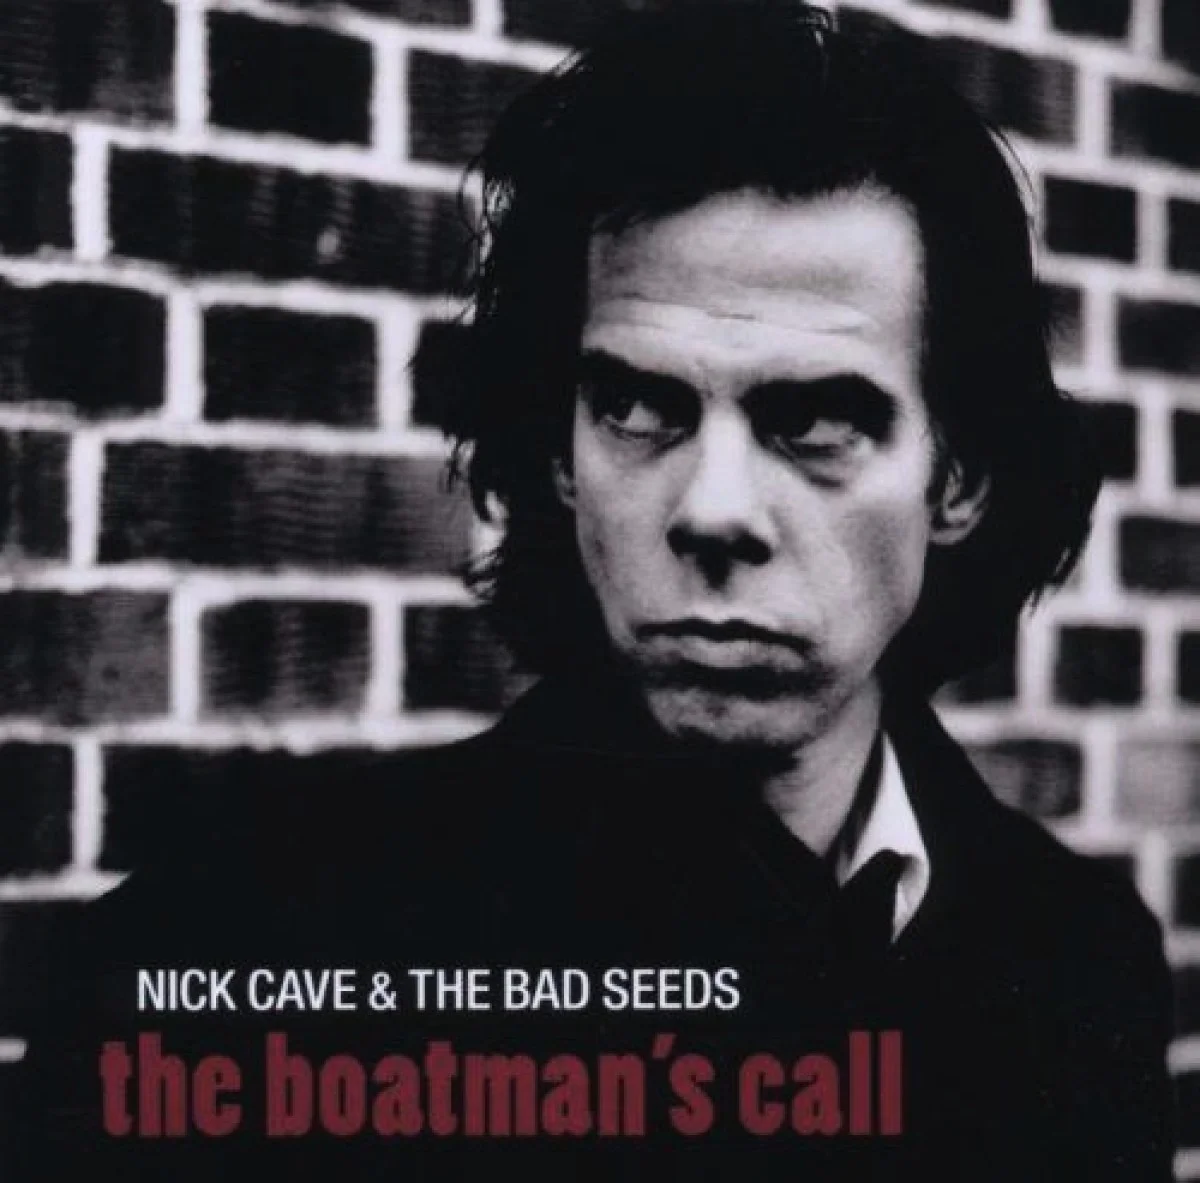 NICK CAVE & THE BAD SEEDS - The Boatman's Call Vinyl - JWrayRecords